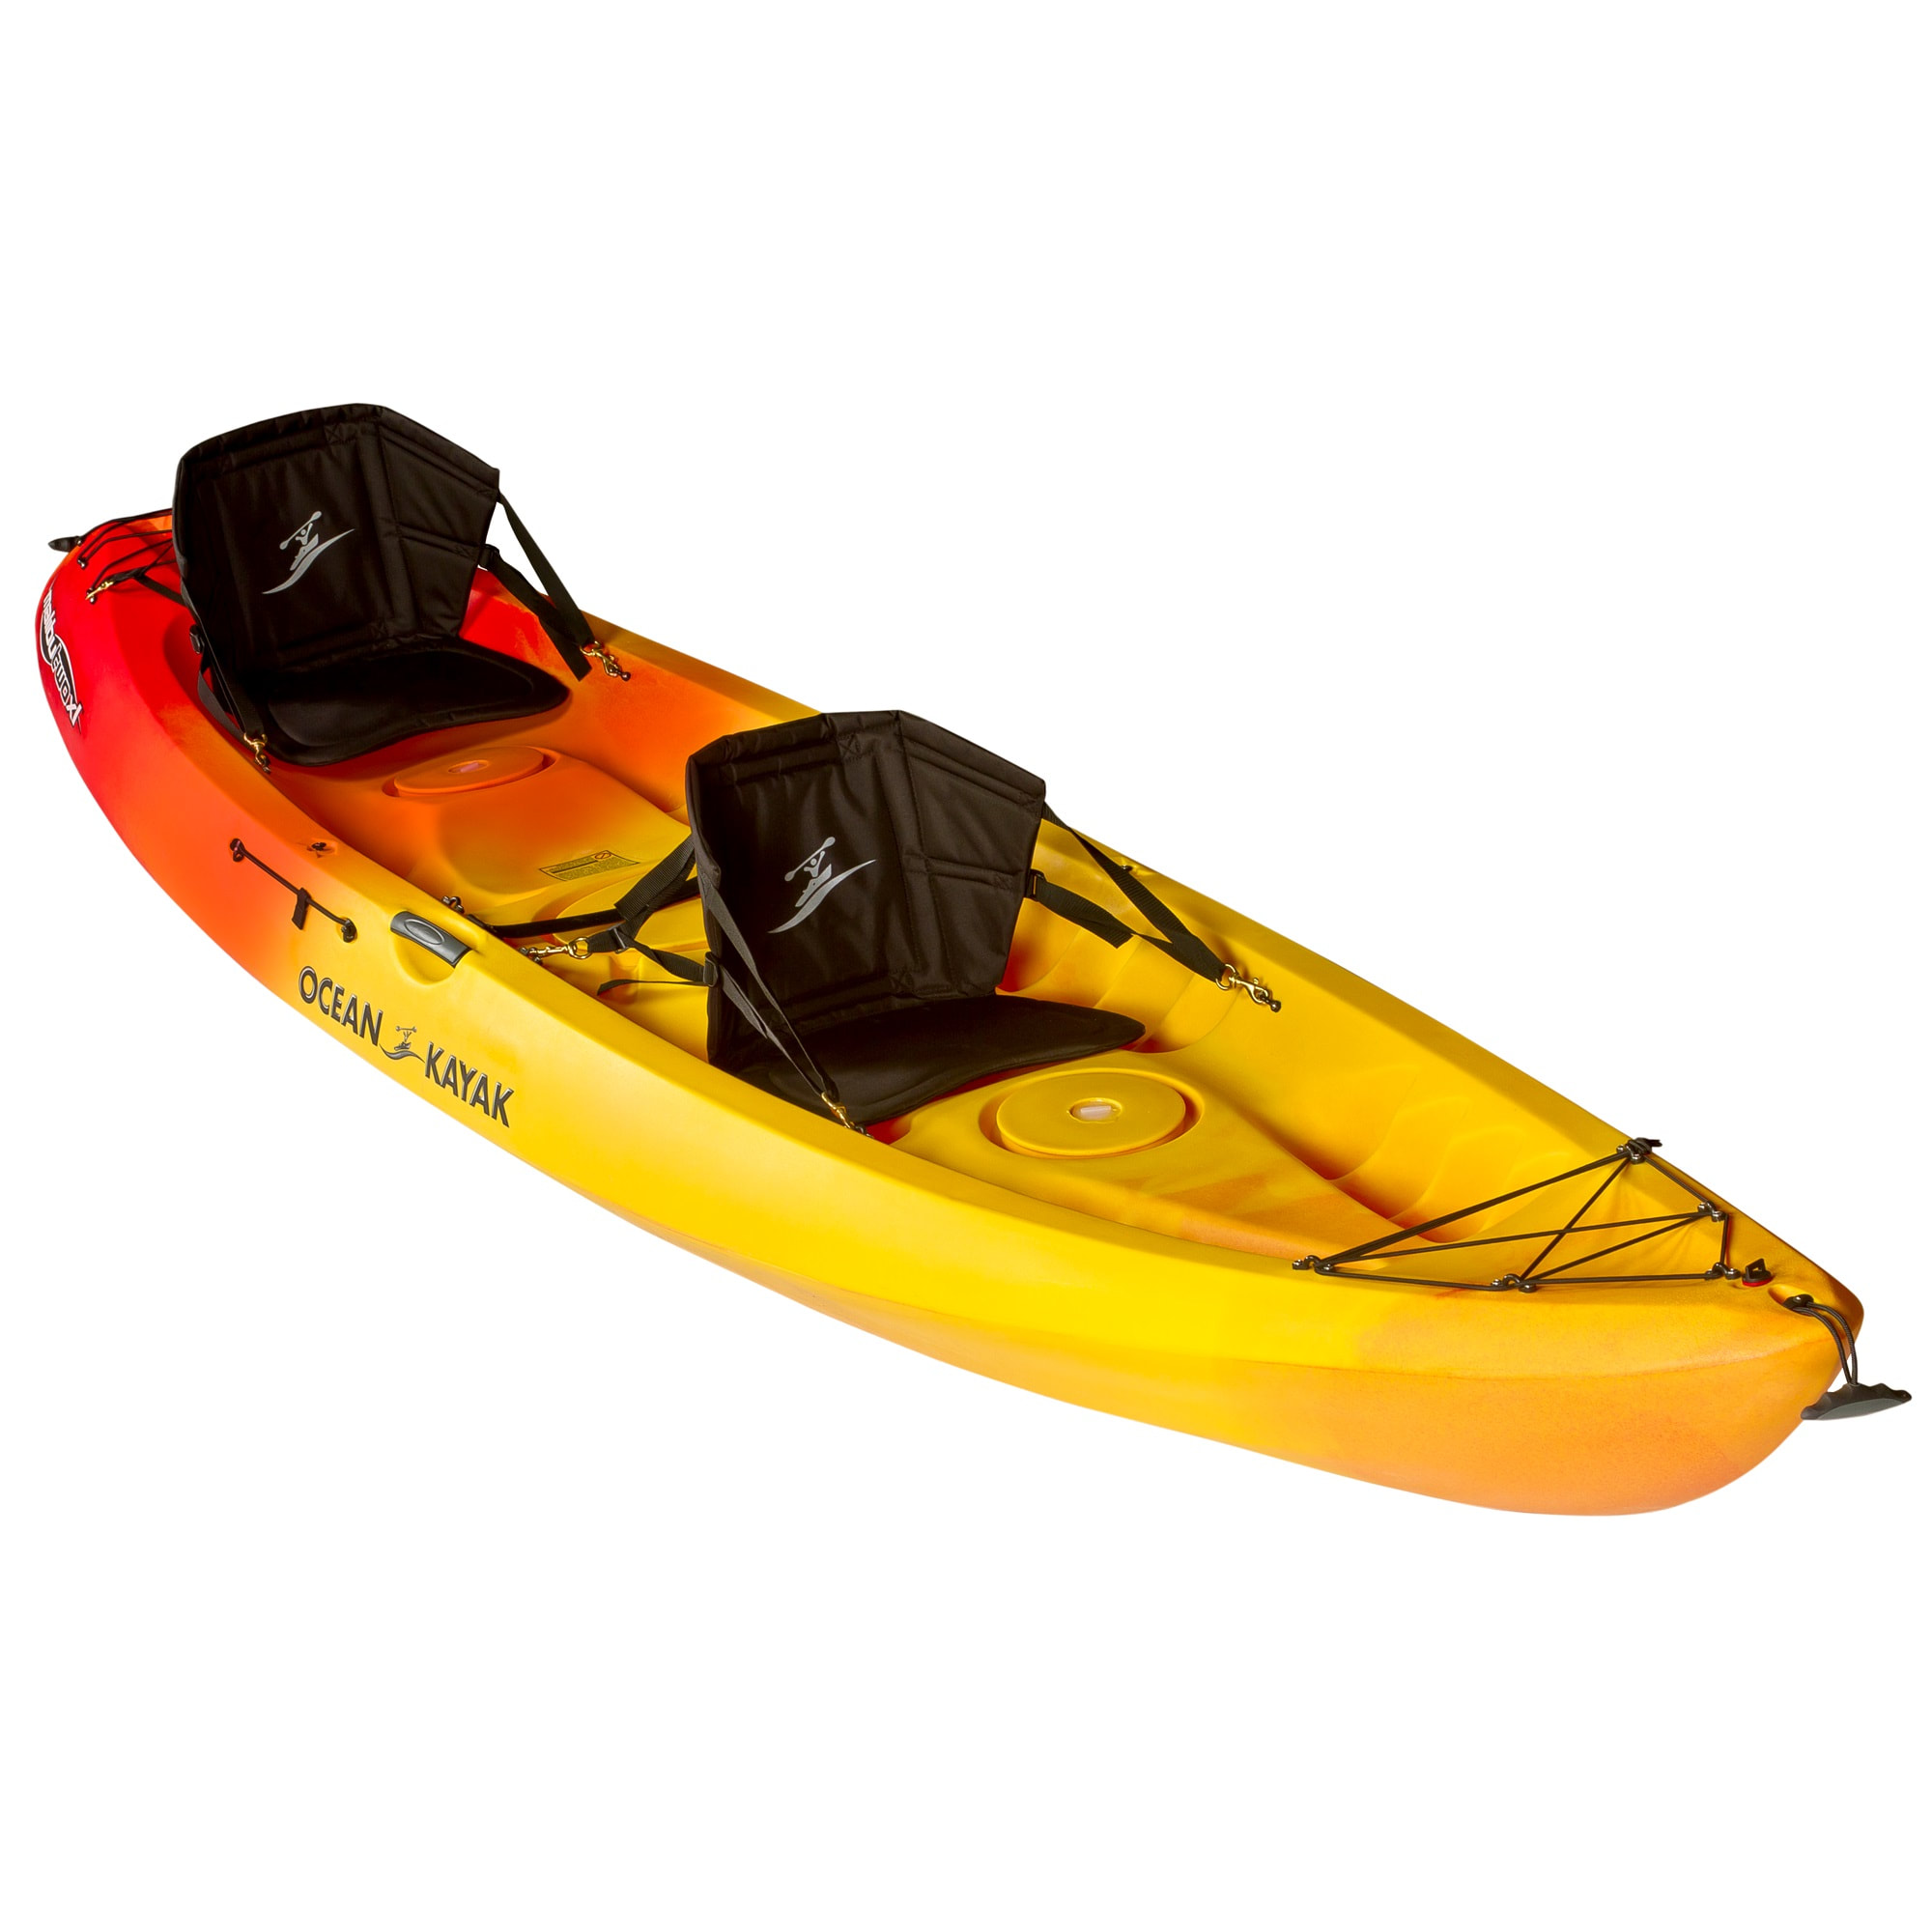 Malibu Two Xl Ocean Kayaks In Stock 